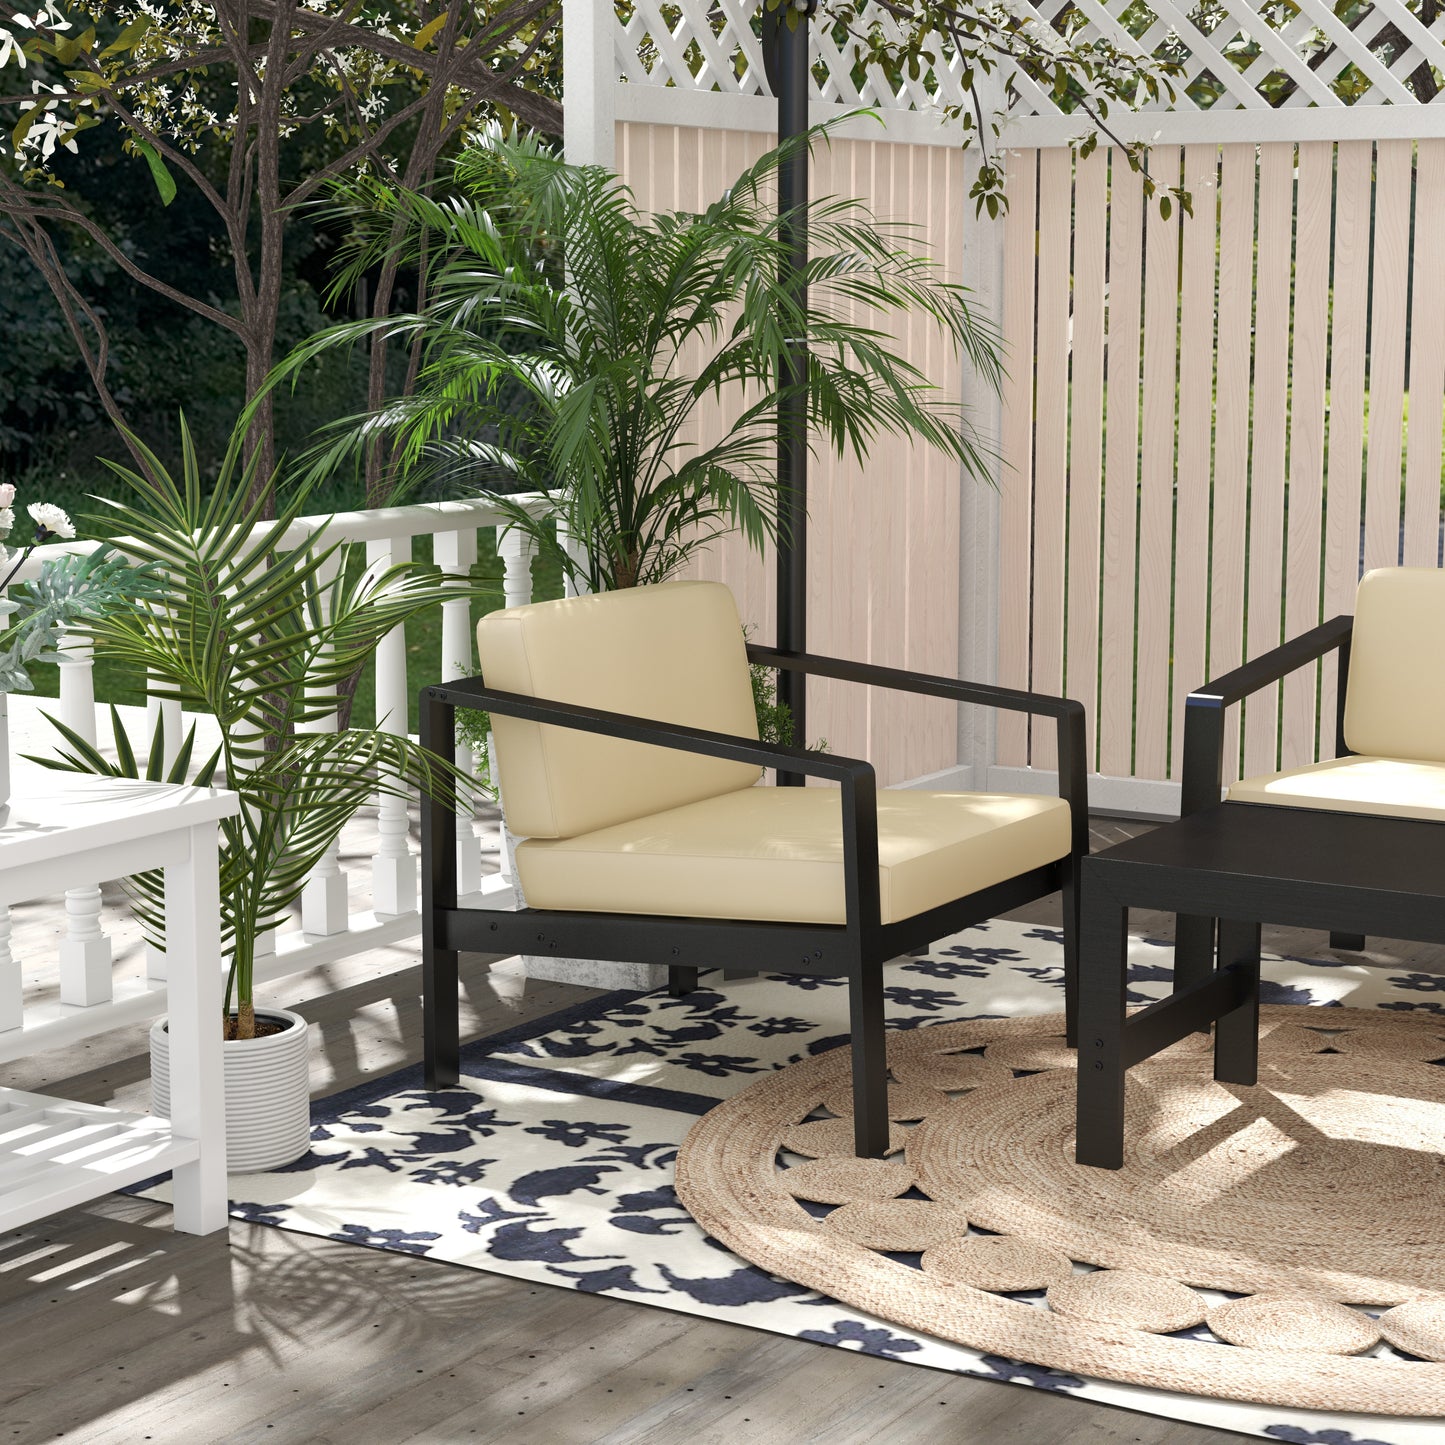 Outdoor Patio Furniture Single Armchair with Cushions in stripe for Restaurant Outdoor courtyard Garden Open-air balcony Poolside,Black aluminum fram,Modern Design